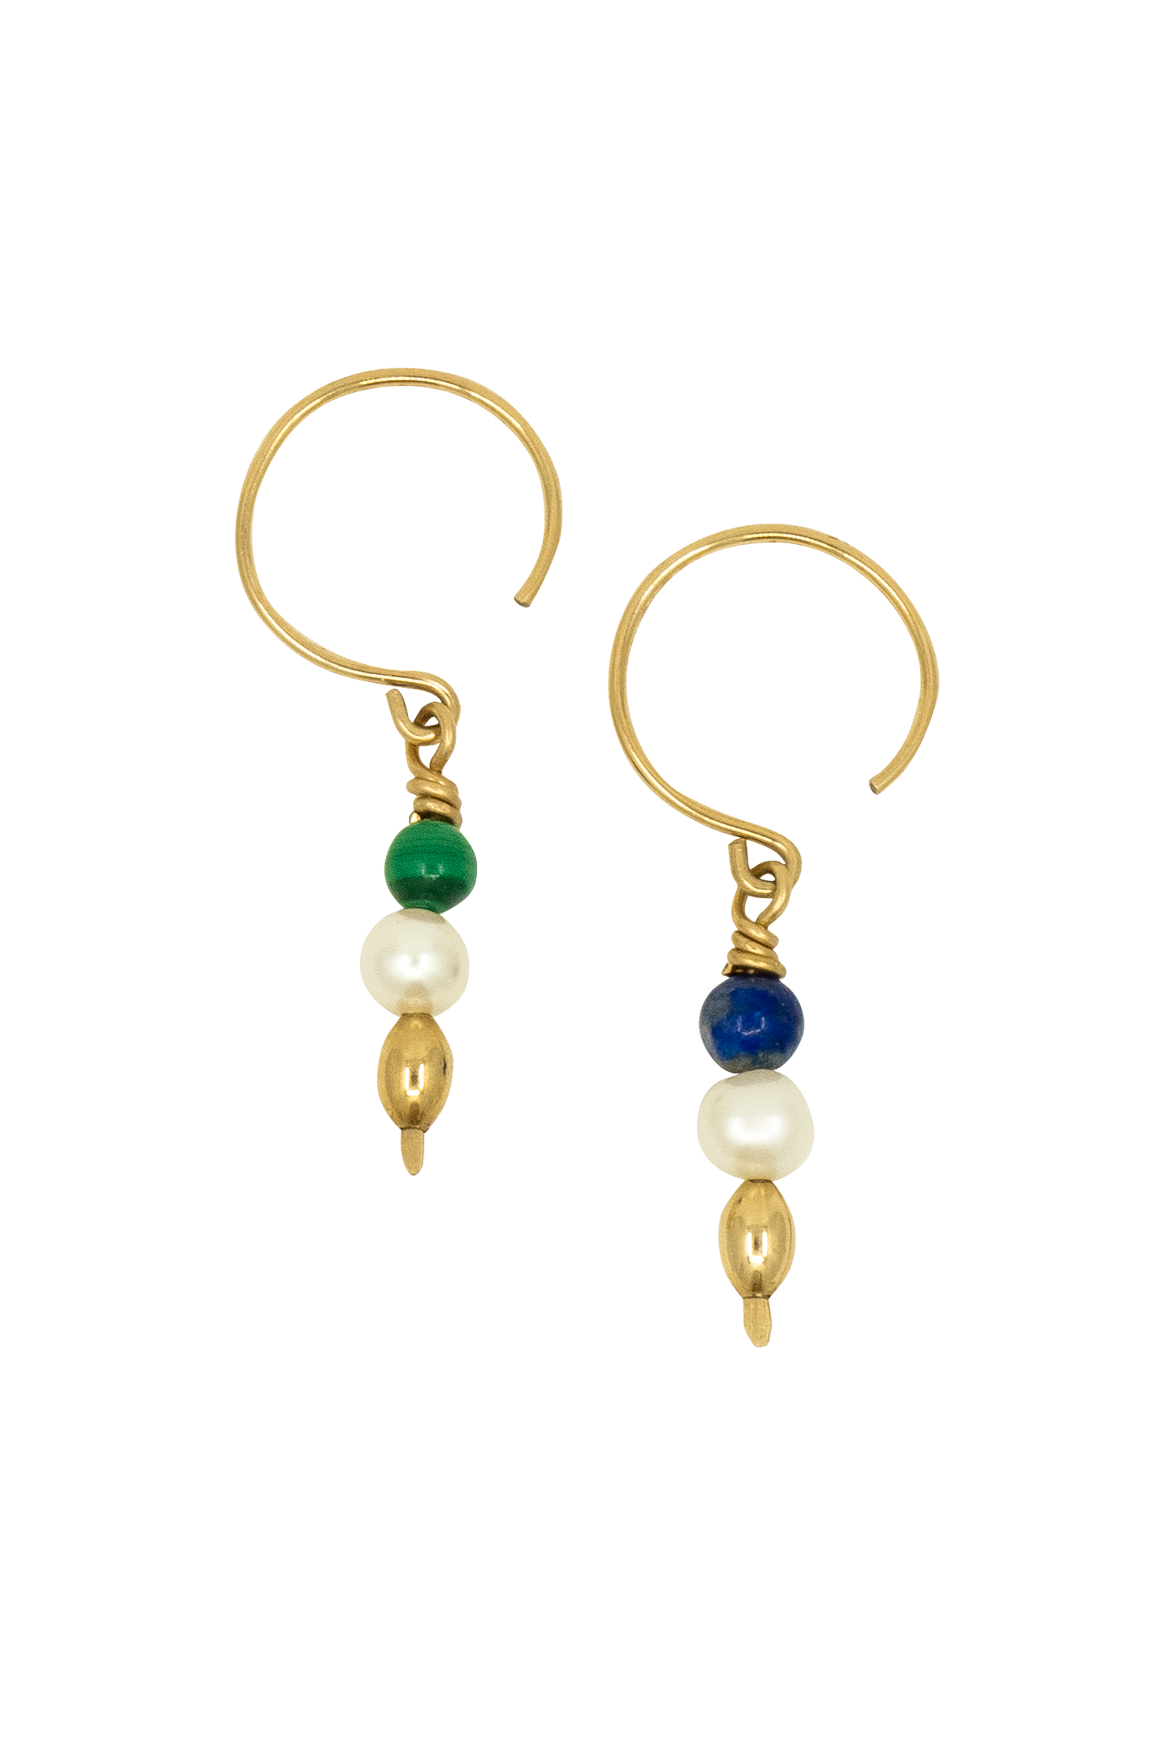 Rice Pearl Bracelet and Earring Set - Malachite